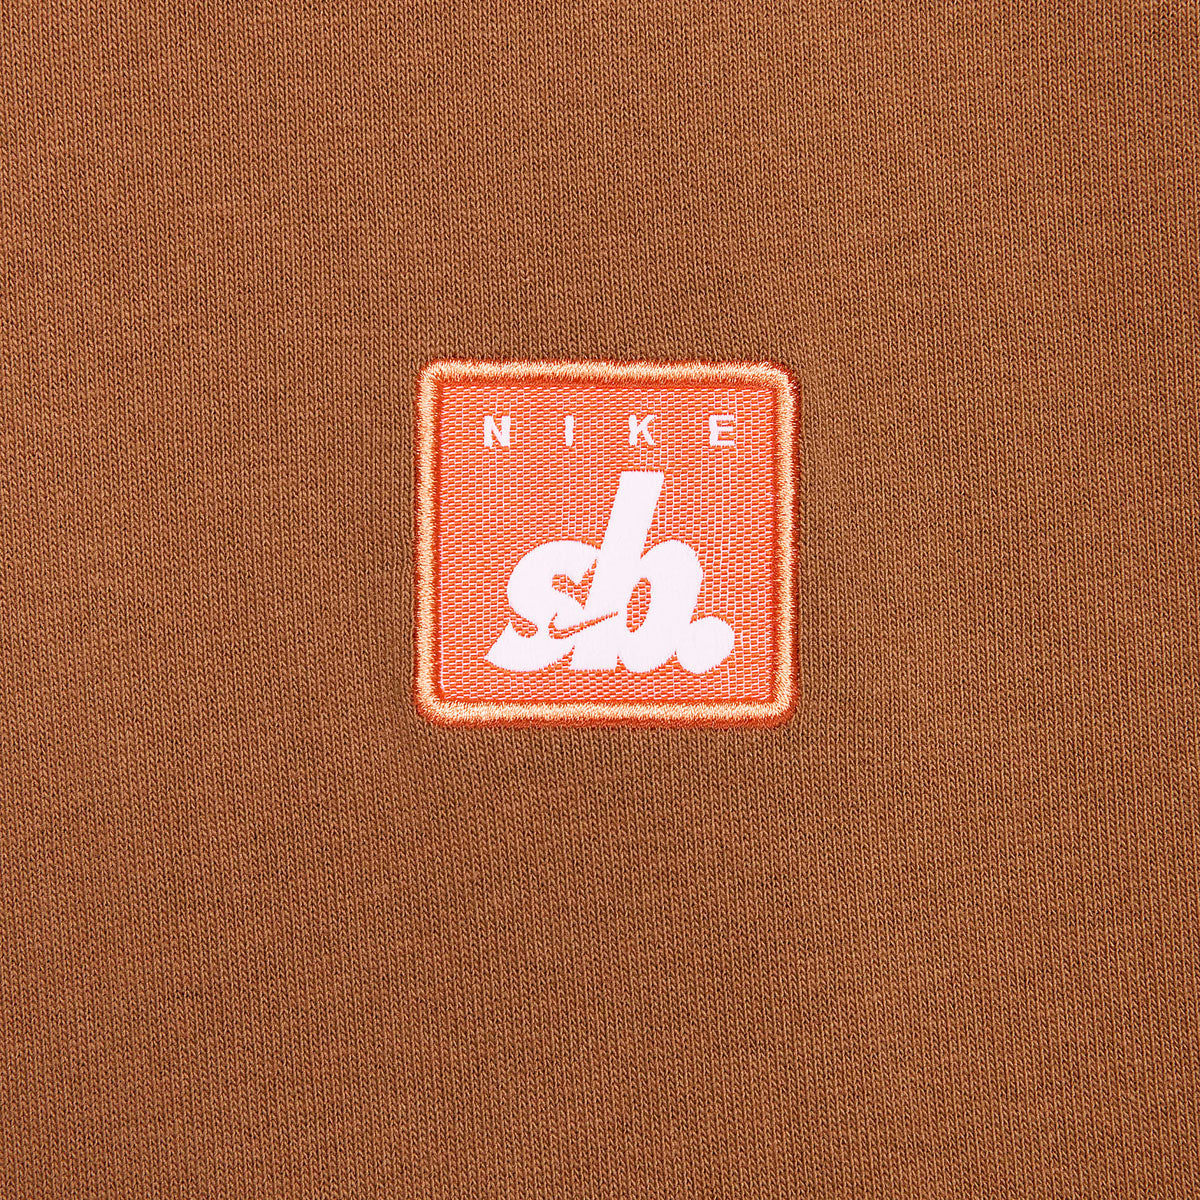 Nike SB Lowercase T-Shirt - Light British Tan image 4